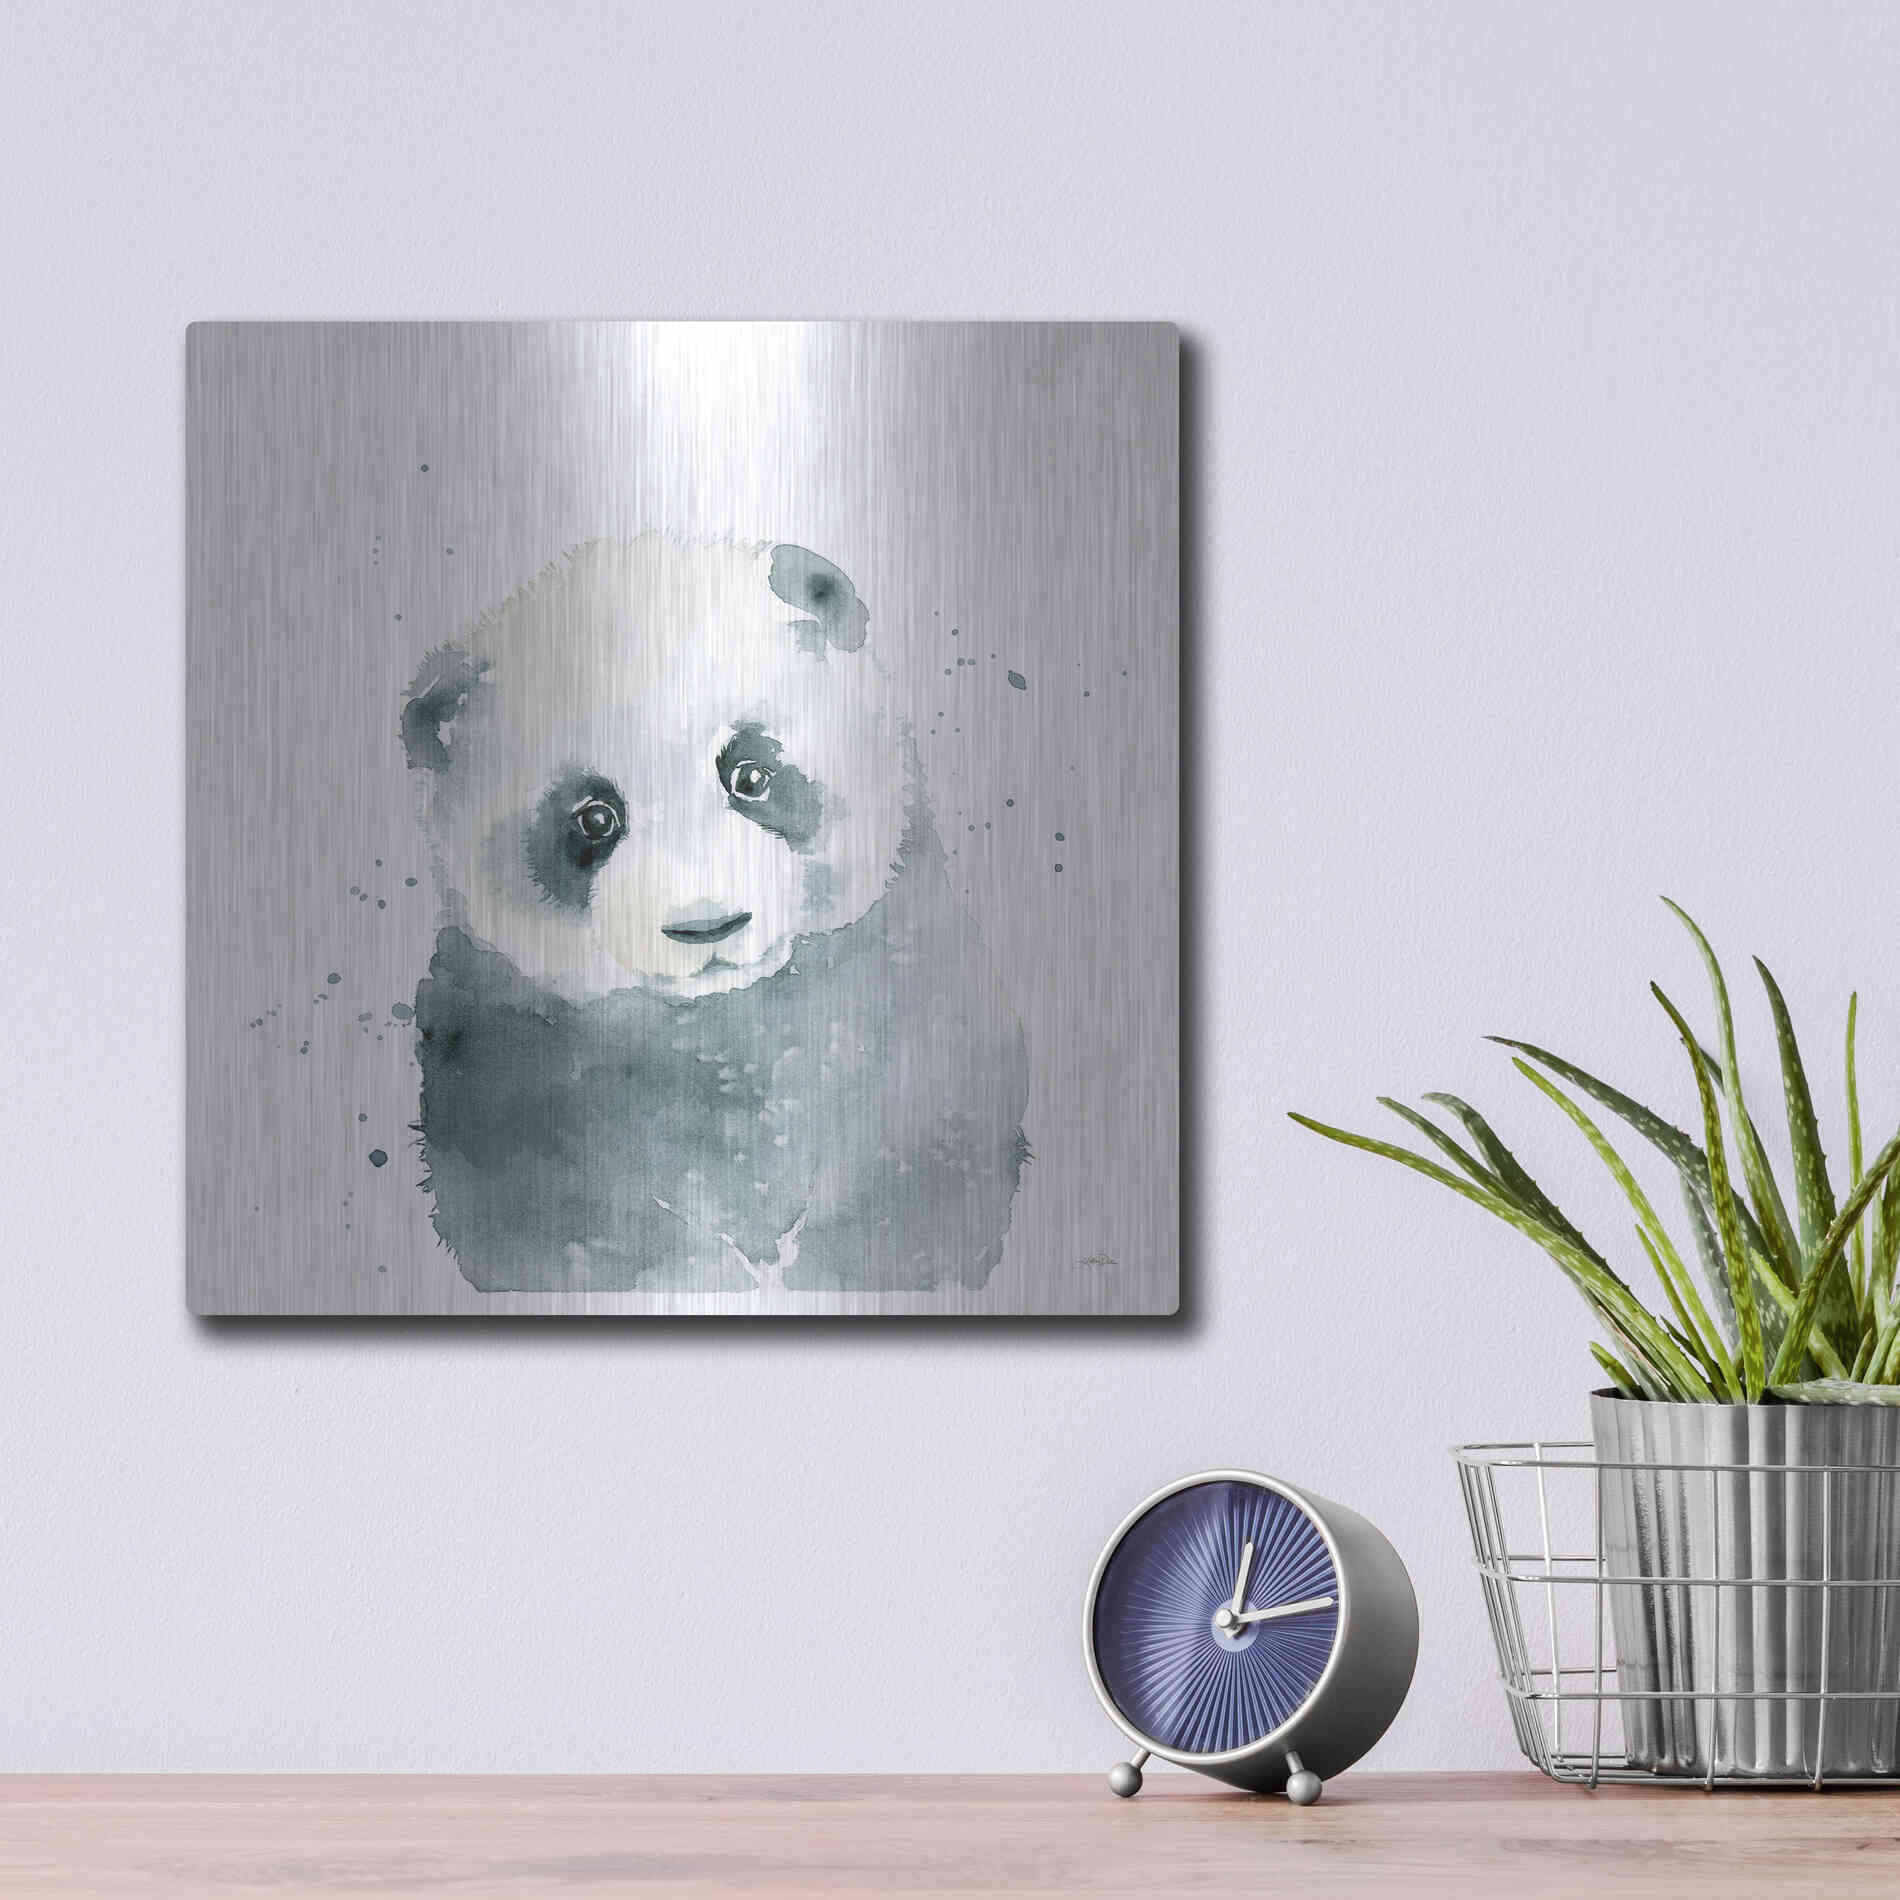 Luxe Metal Art 'Panda Cub' by Katrina Pete, Metal Wall Art,12x12